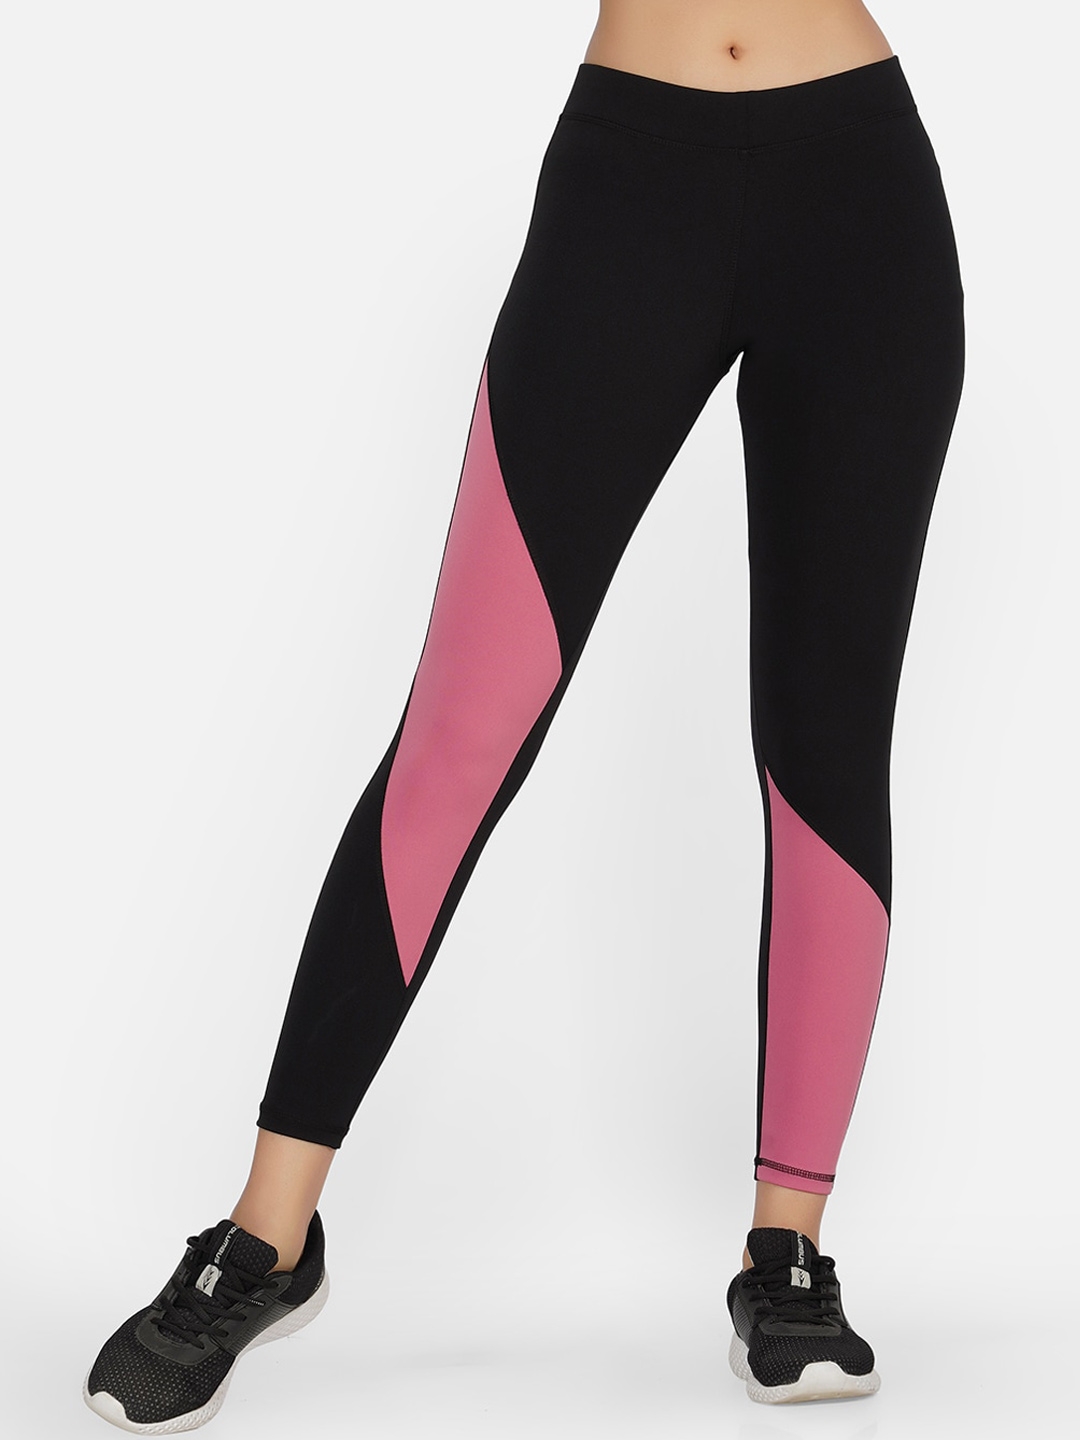 NEU LOOK FASHION Women Black & Pink Colourblocked Gym Tights